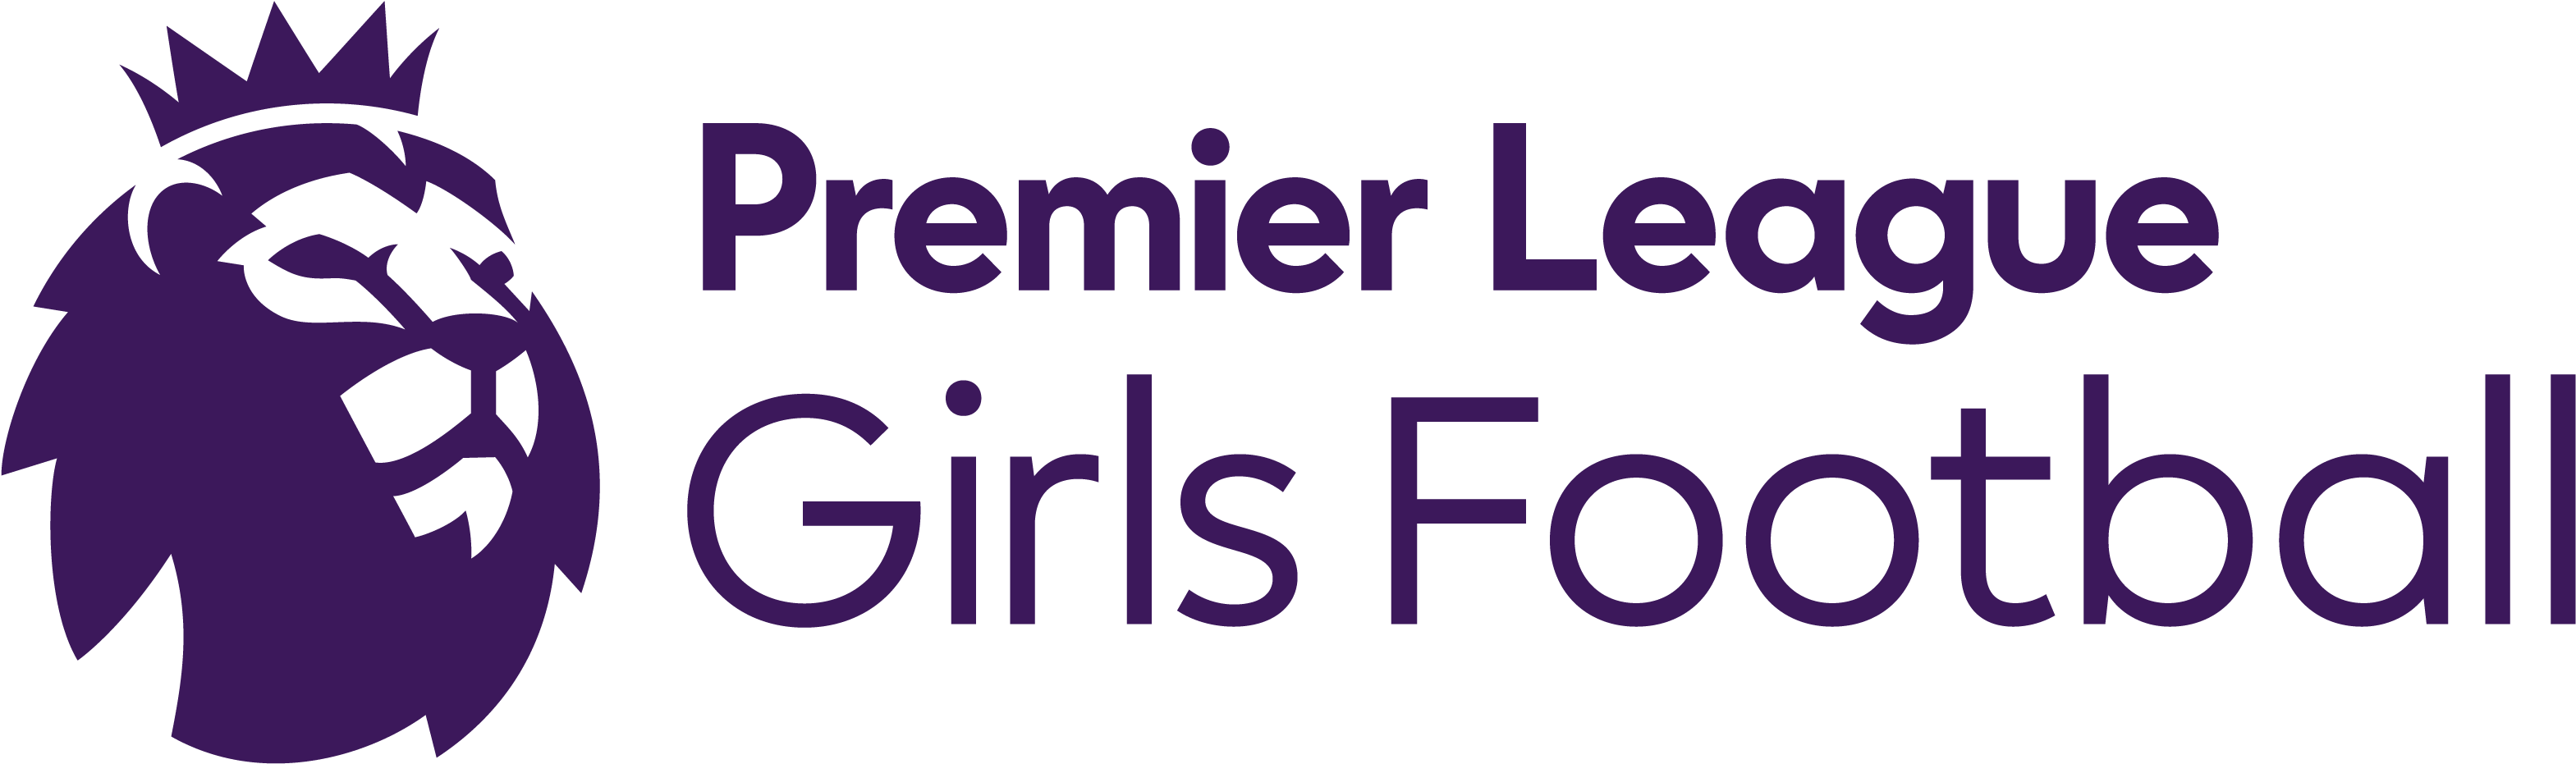 Premier League Girls Football - Premier League Equality Standard (3543x1336), Png Download